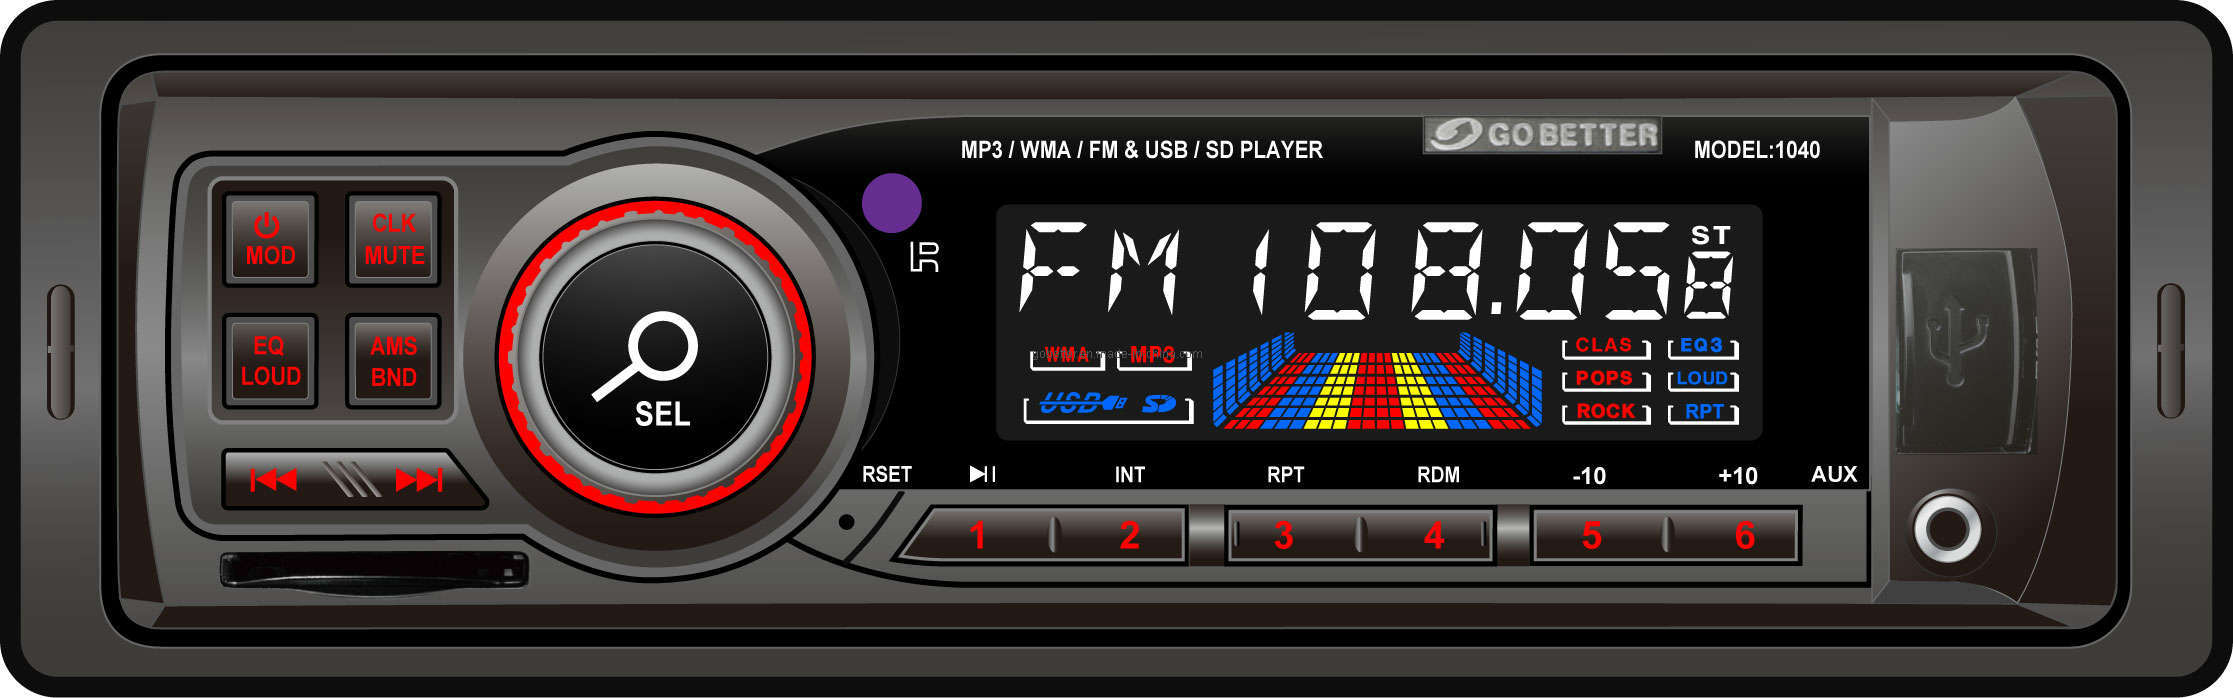 Car MP3 Player (1040)